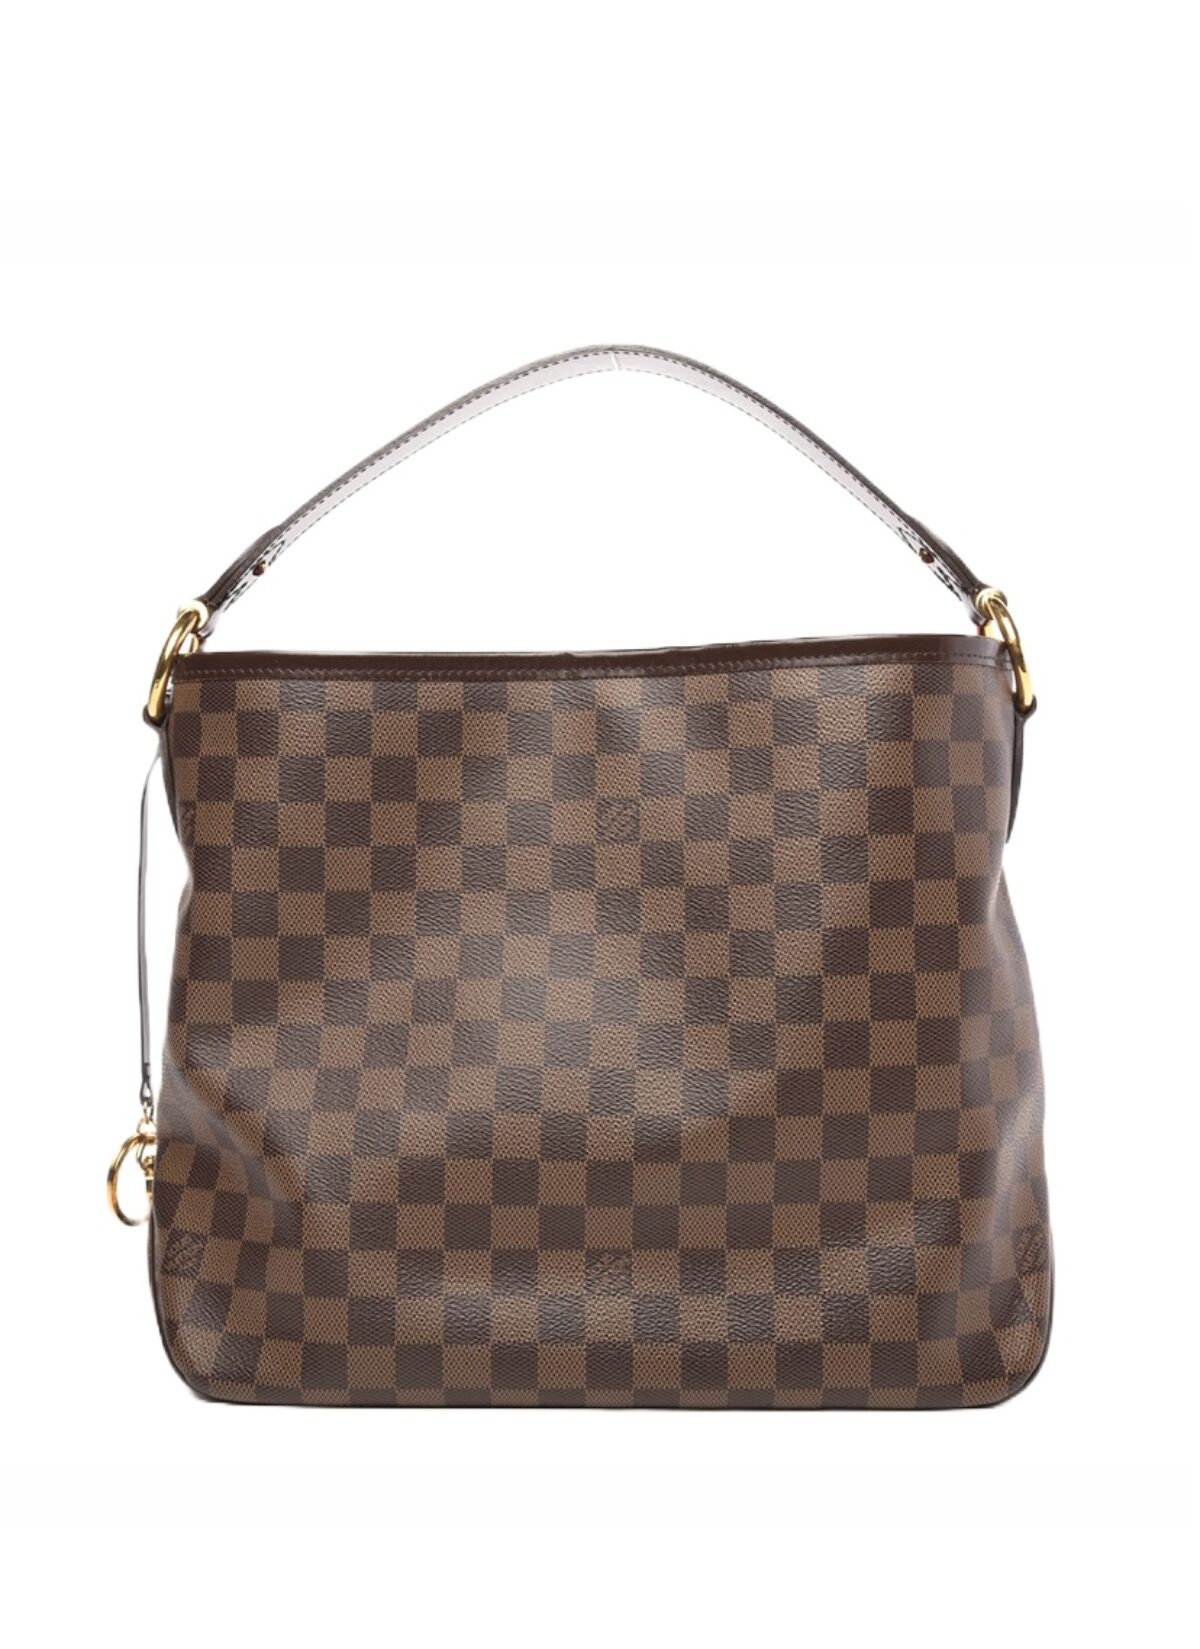 Louis Vuitton - Authenticated Boetie Handbag - Leather Brown for Women, Good Condition